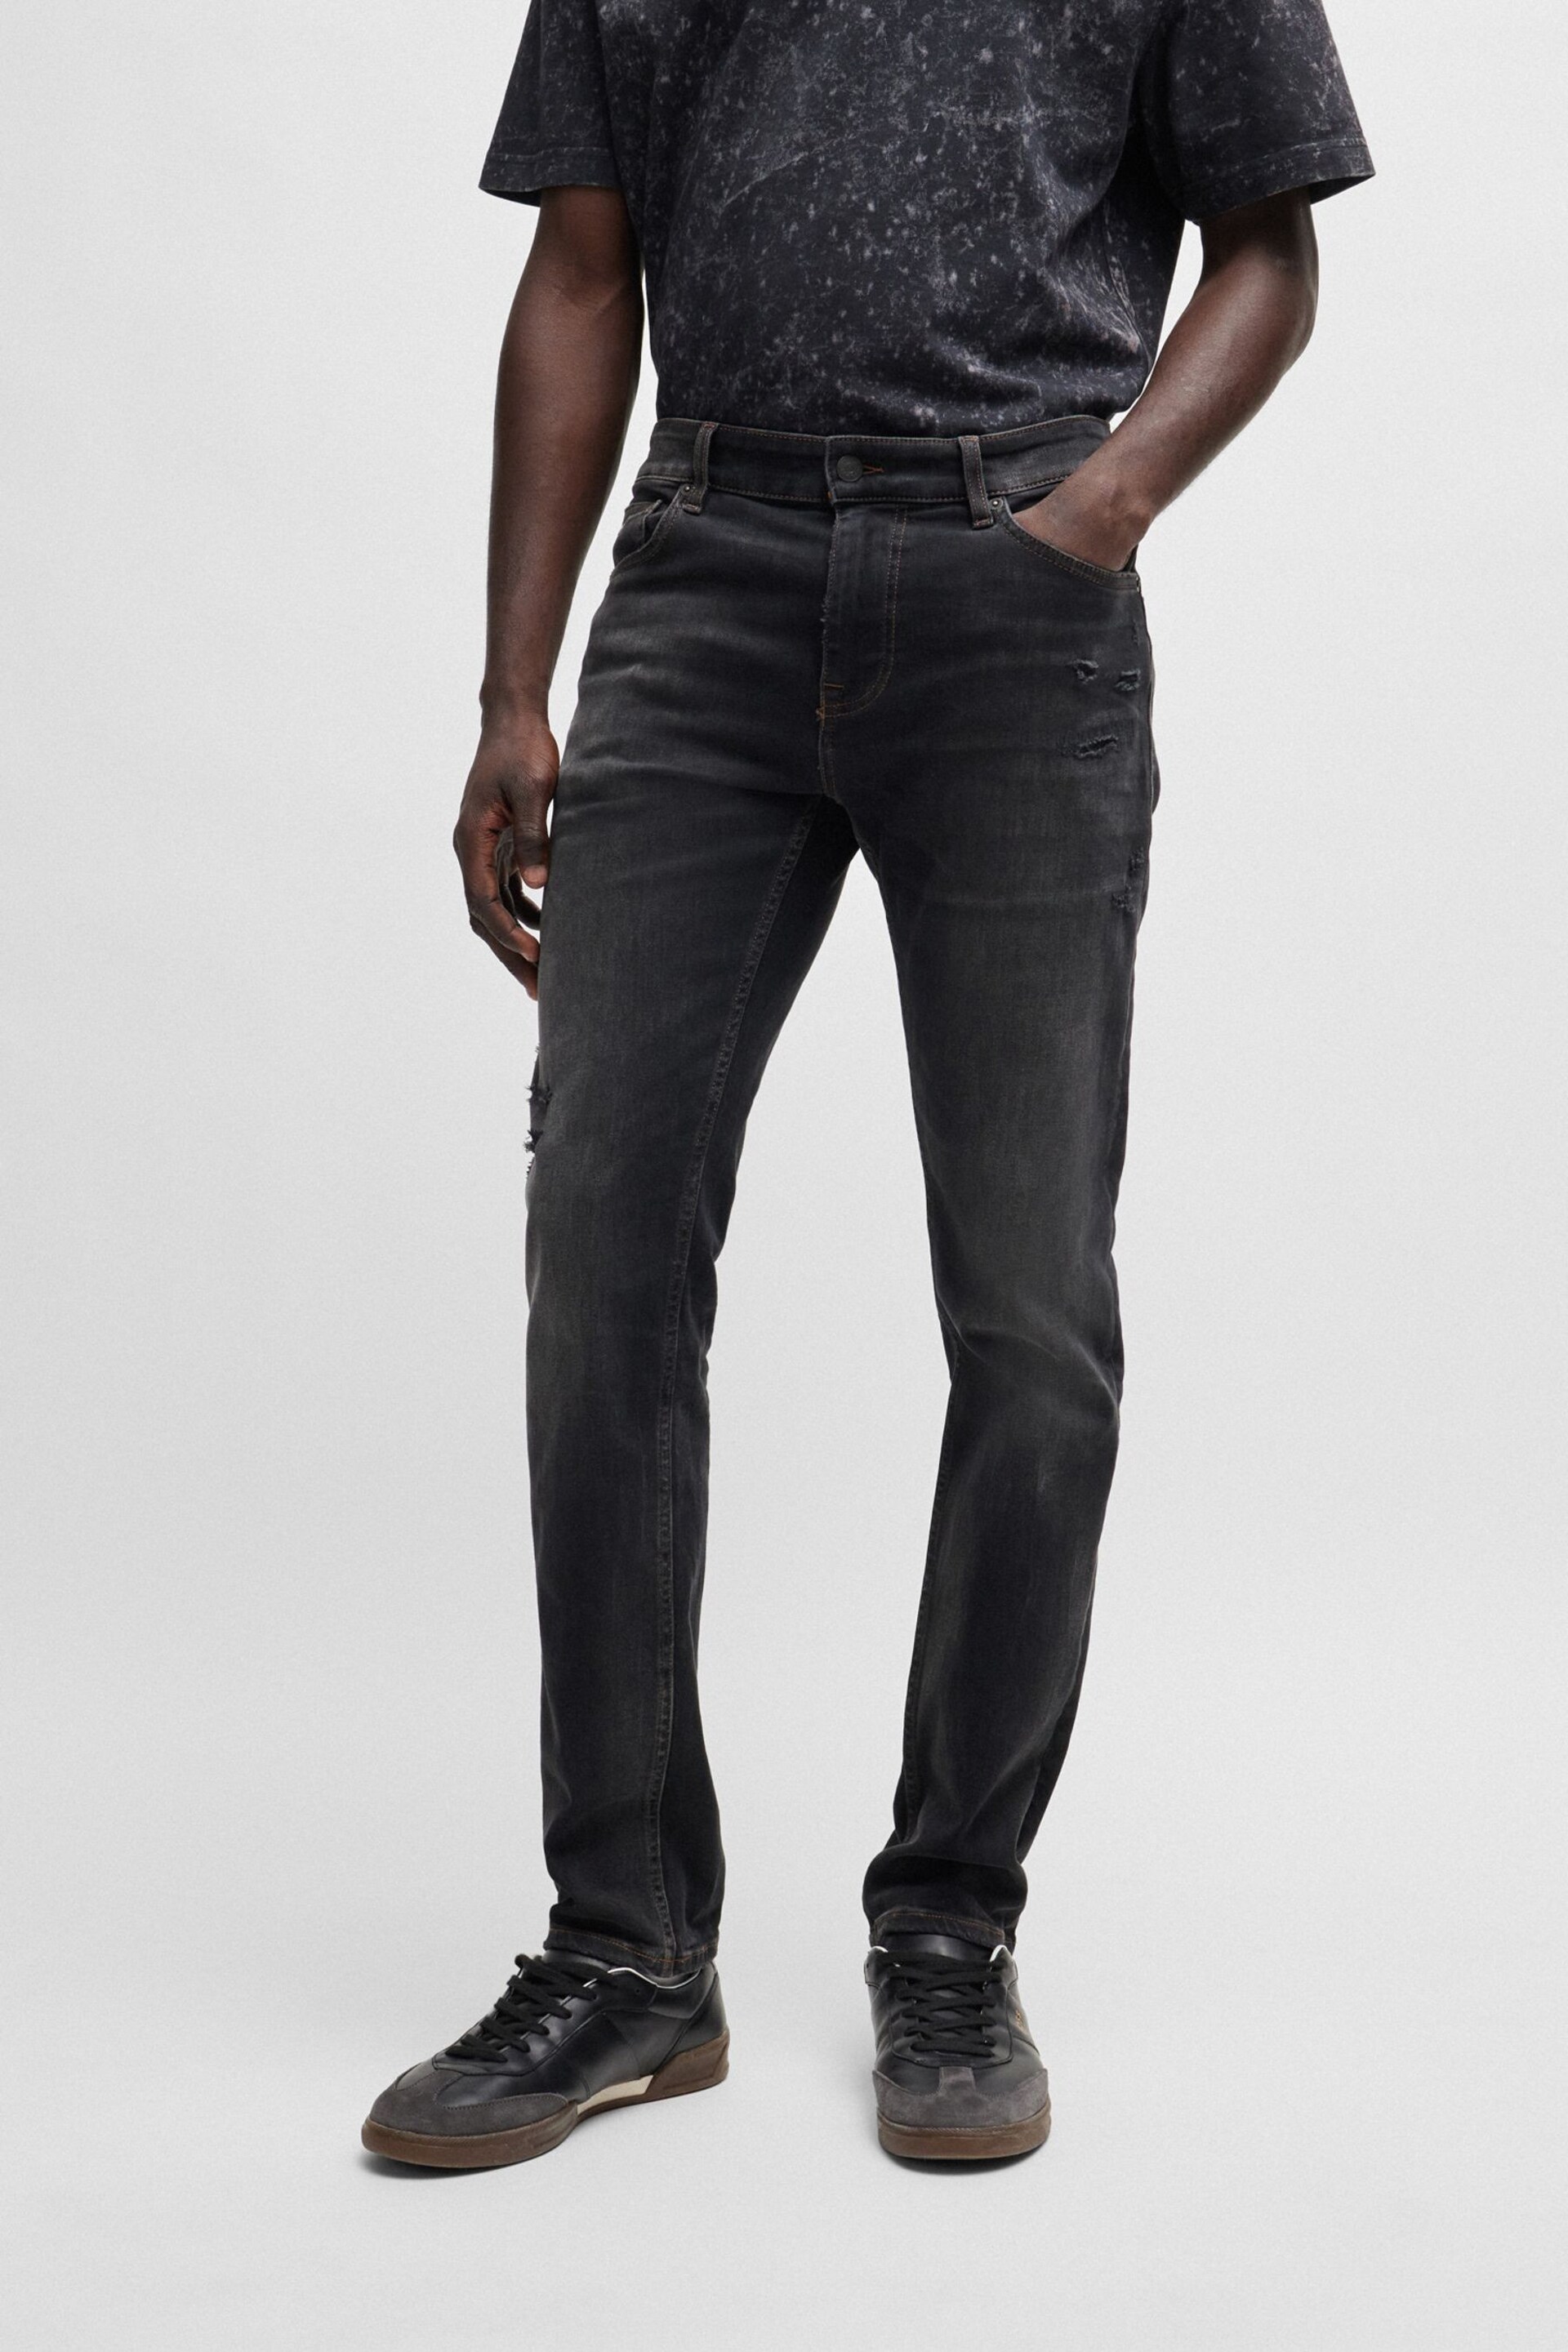 BOSS Grey Light Slim Fit Soft-Motion Denim Jeans - Image 1 of 1